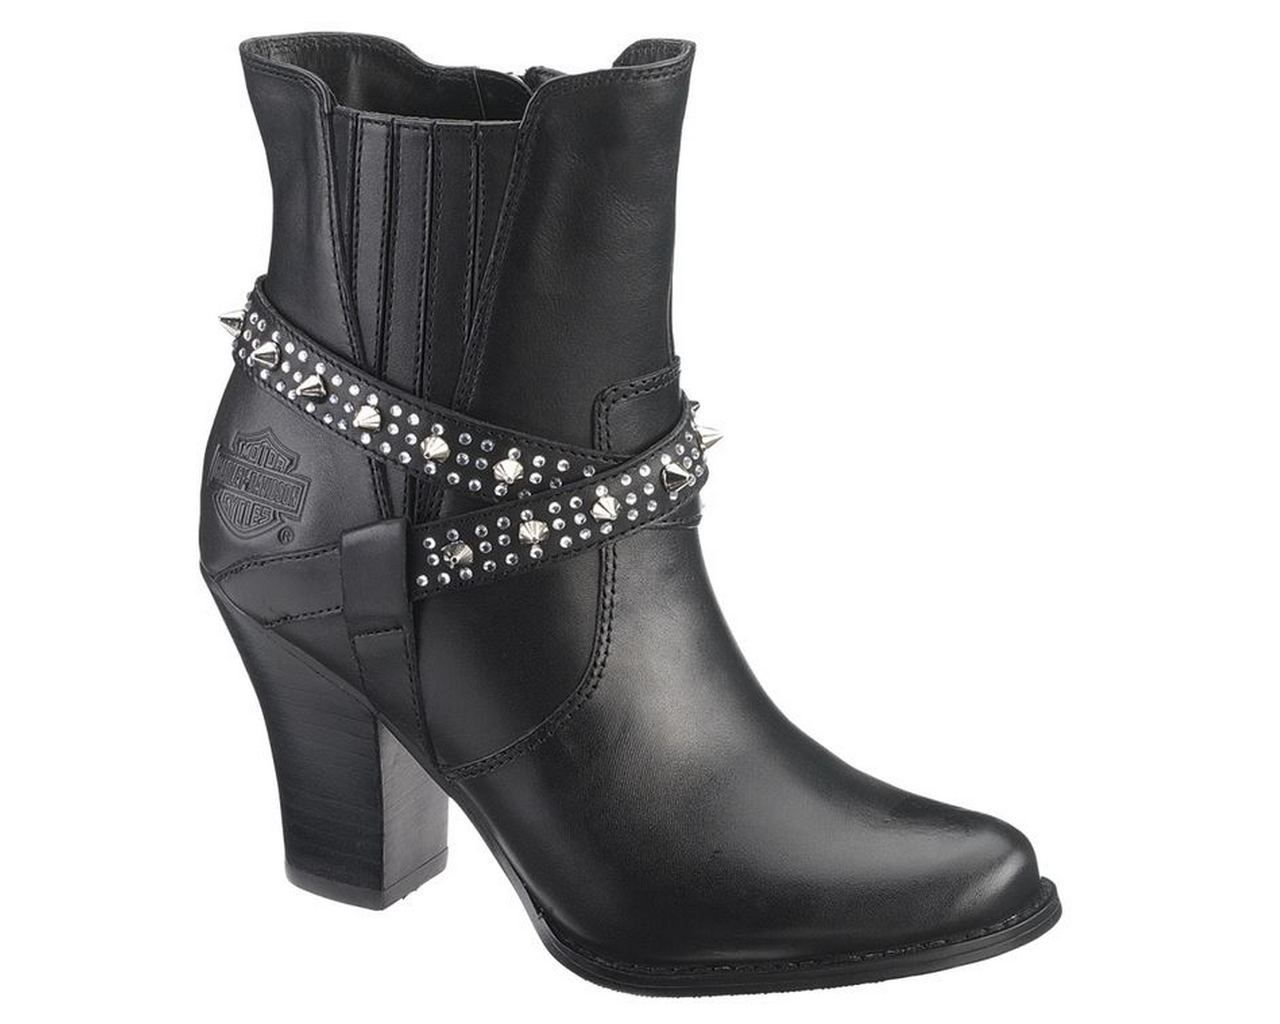 Black Dress Boots. 3-Inch Heels. D83673 